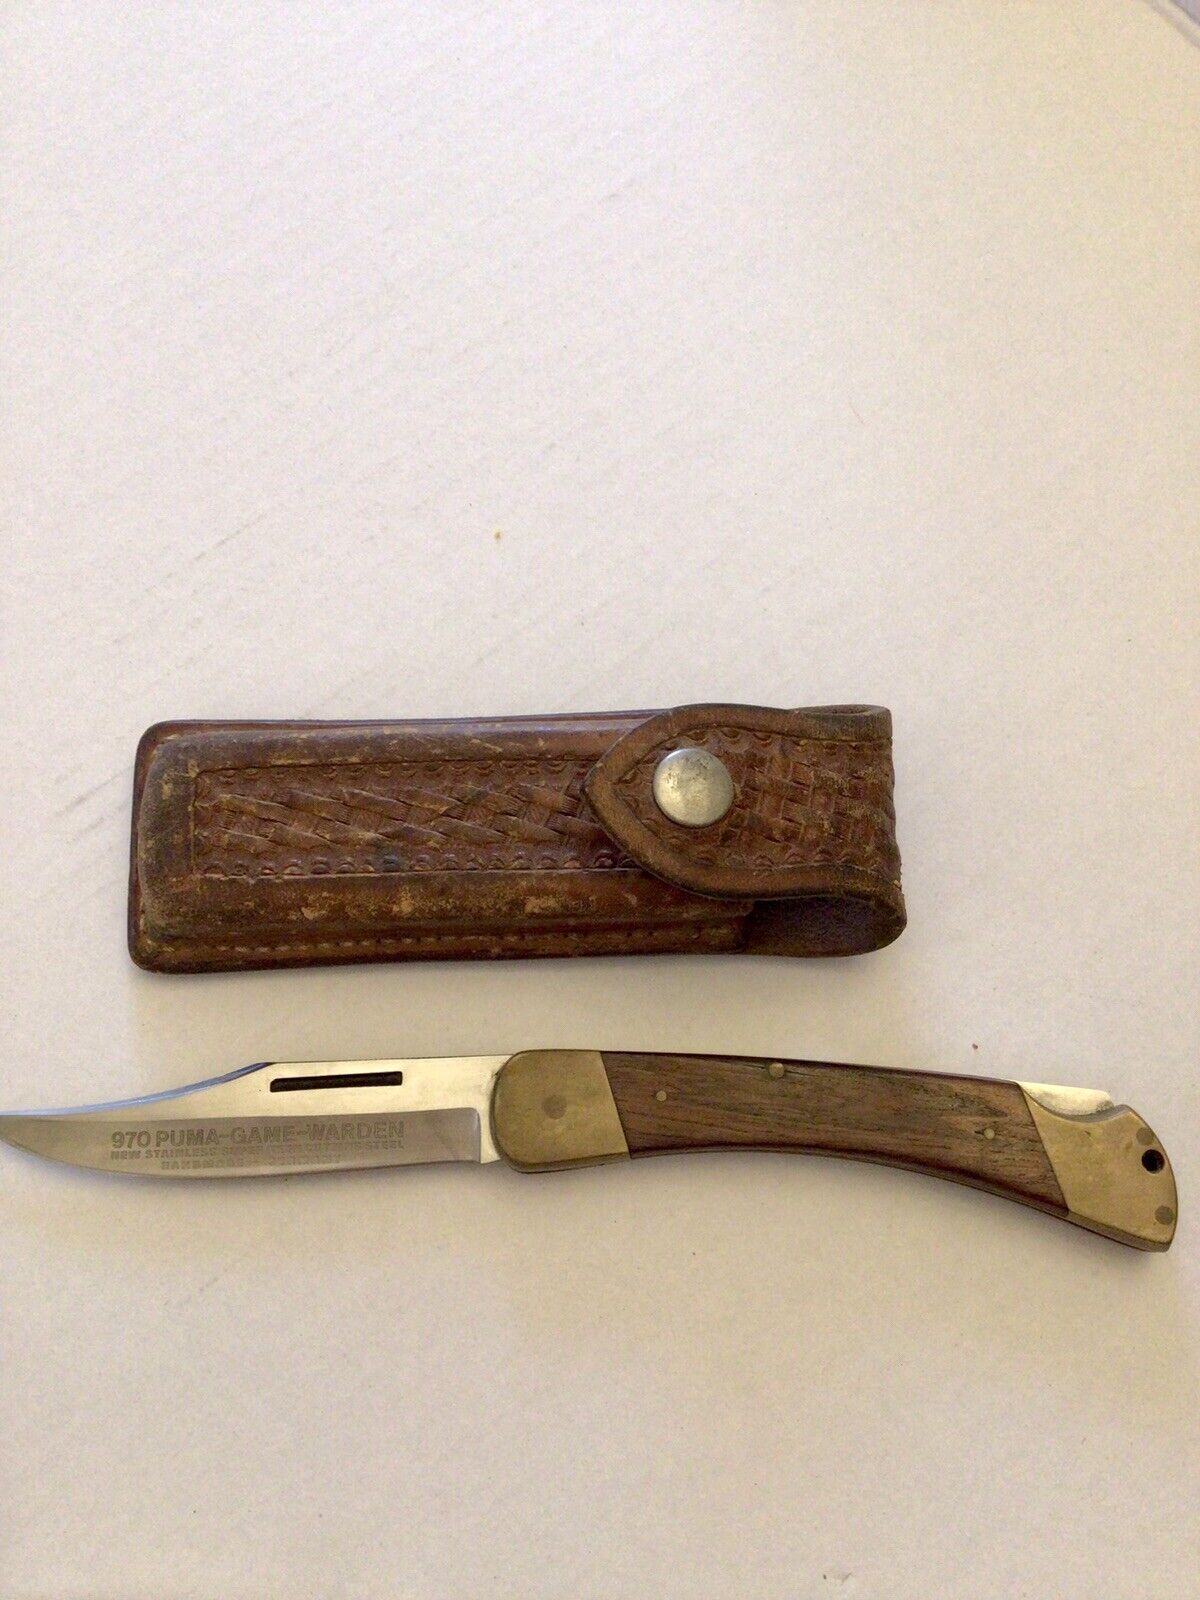 970 Puma Game Warden Handmade Folding Knife and Leather Sheath Vintage German